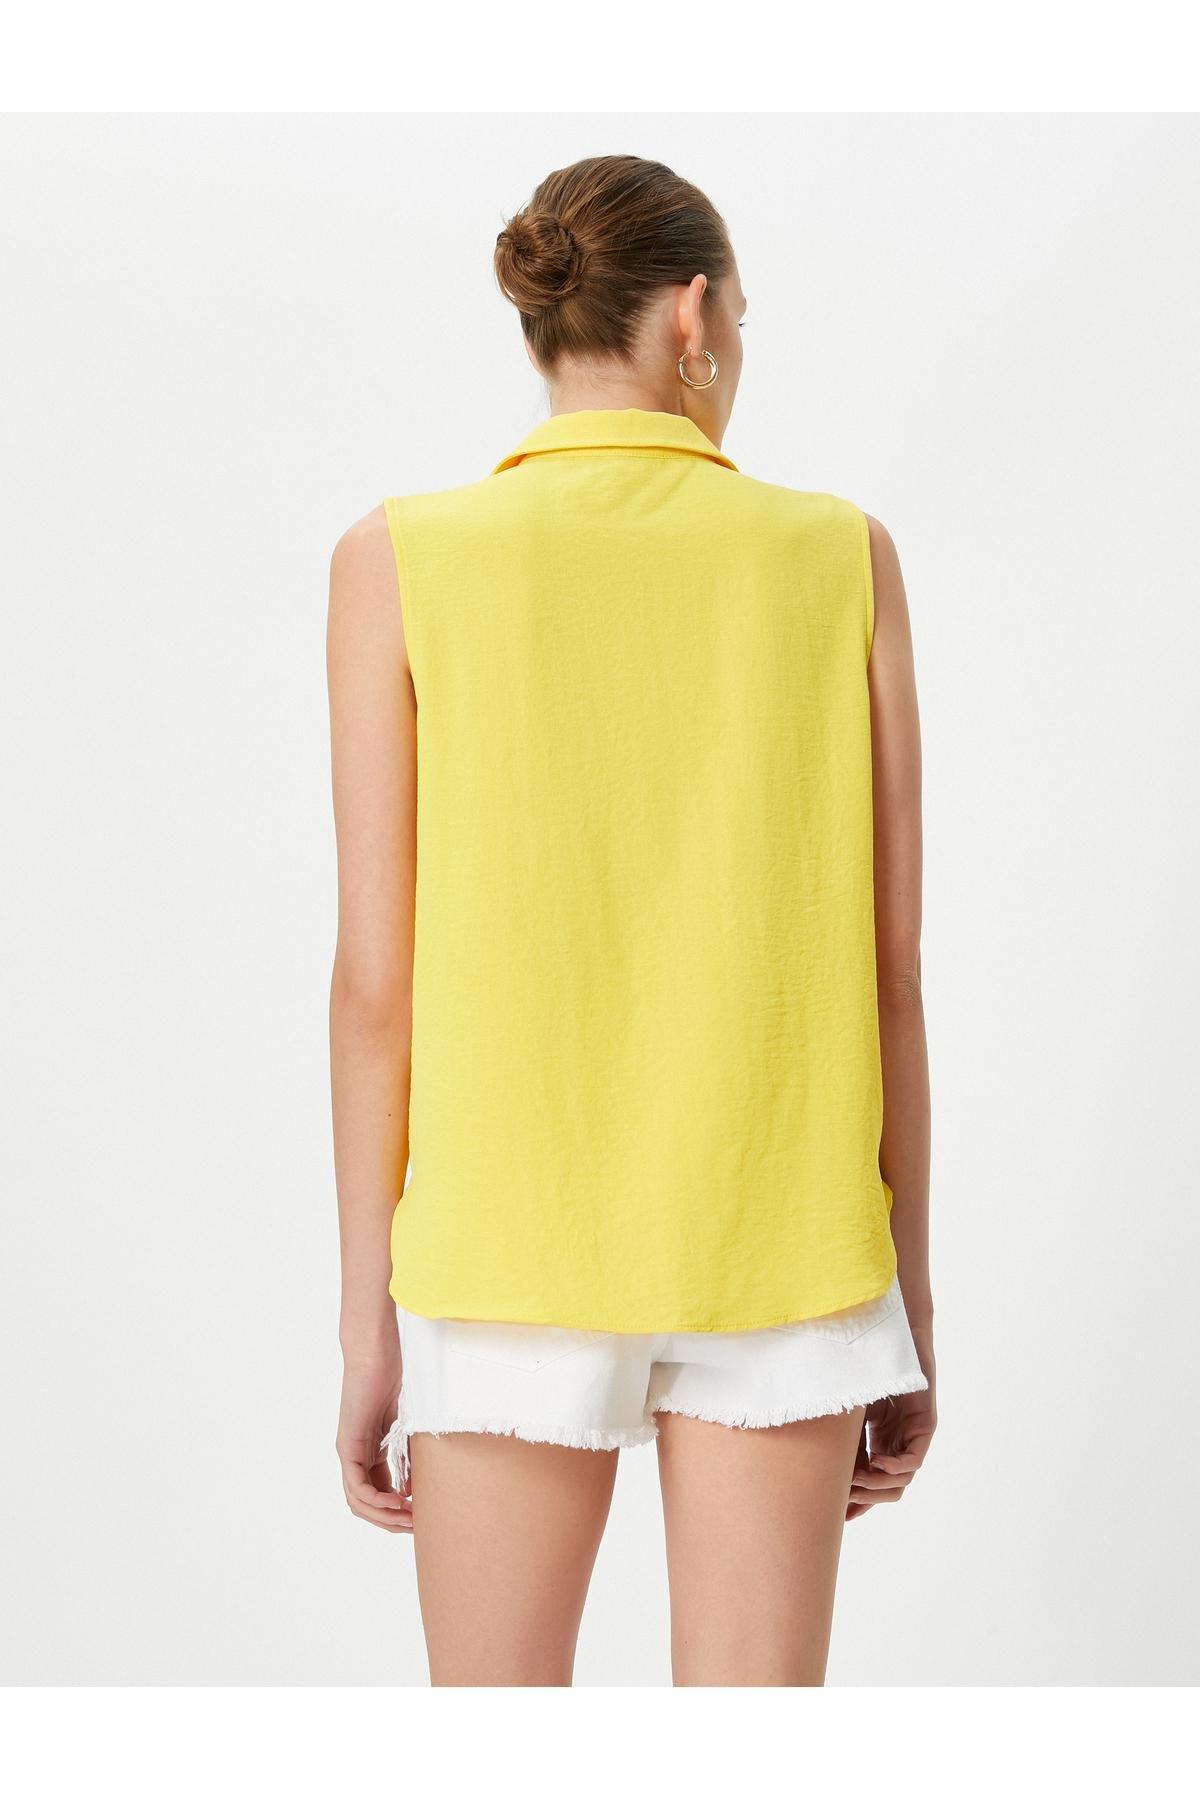 Koton - Yellow Sleeveless Shirt